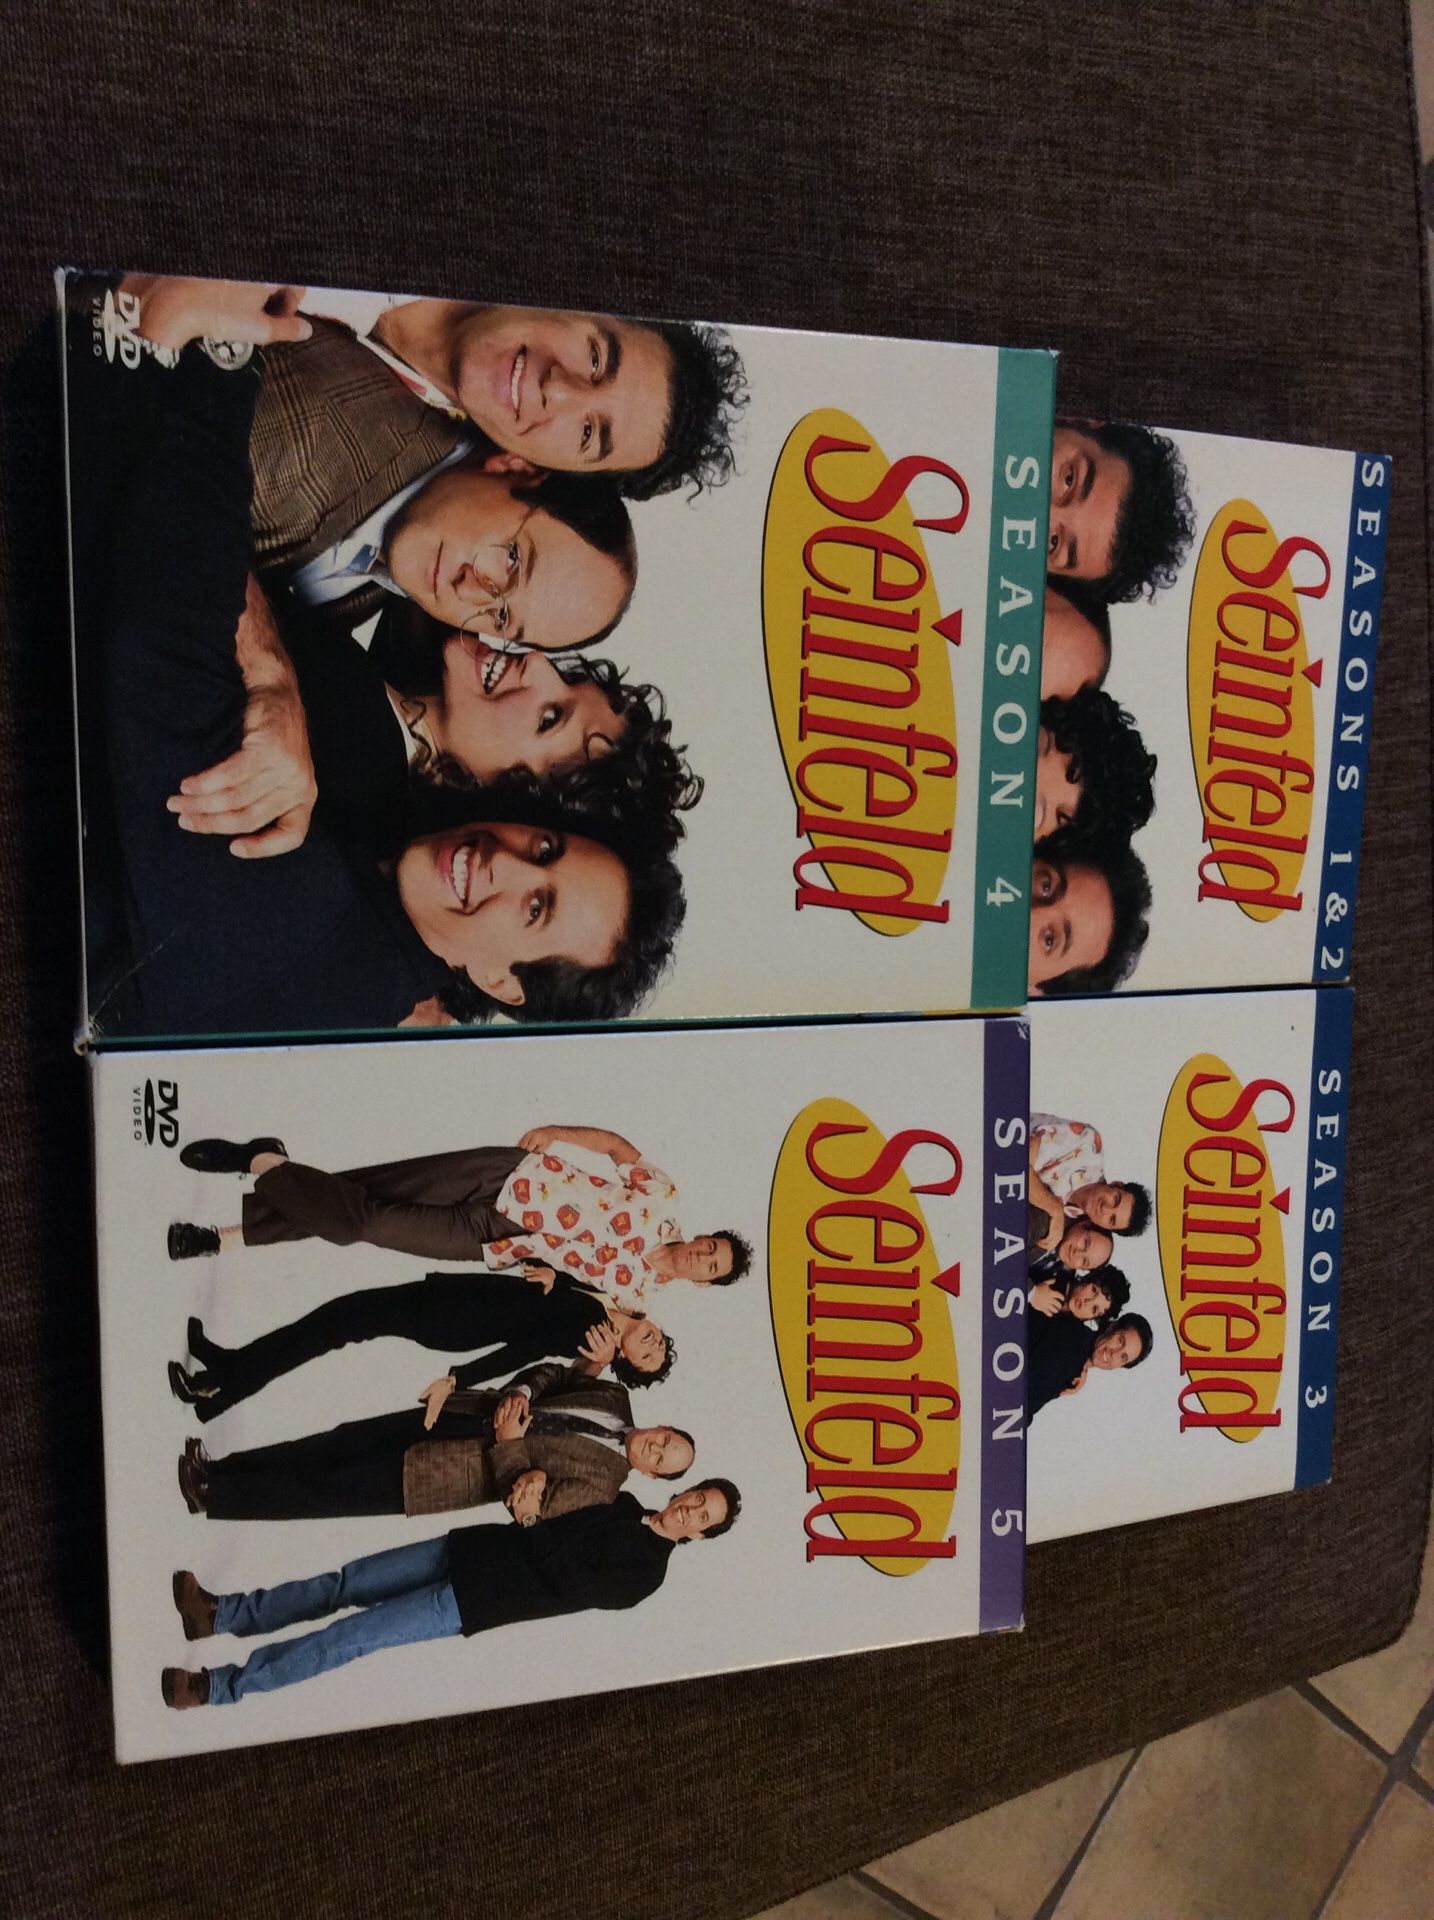 Seinfeld DVD sets